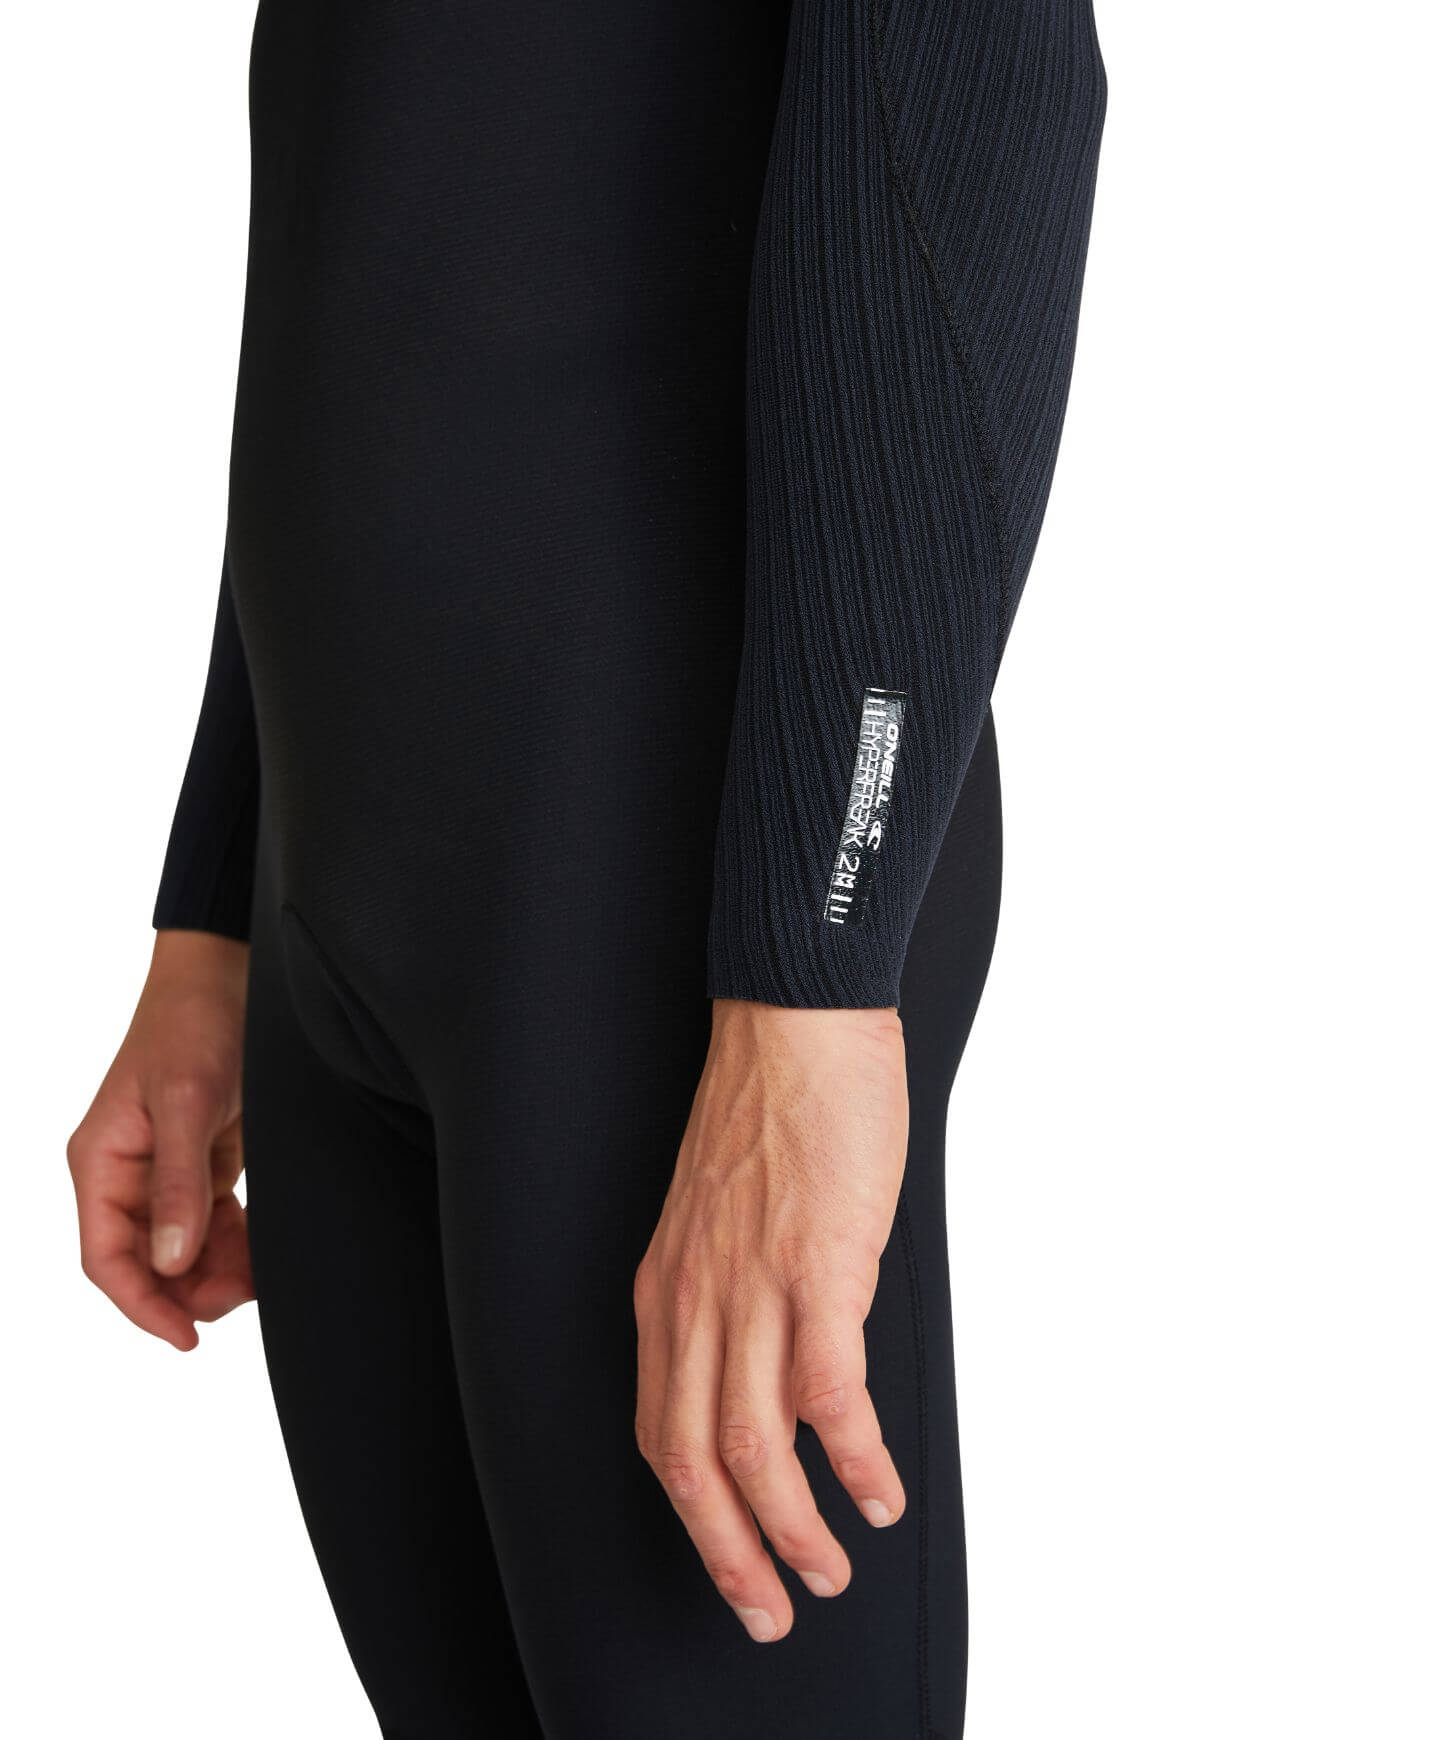 O'NEILL Hyperfreak 2/2mm Steamer Chest Zip Wetsuit - Black